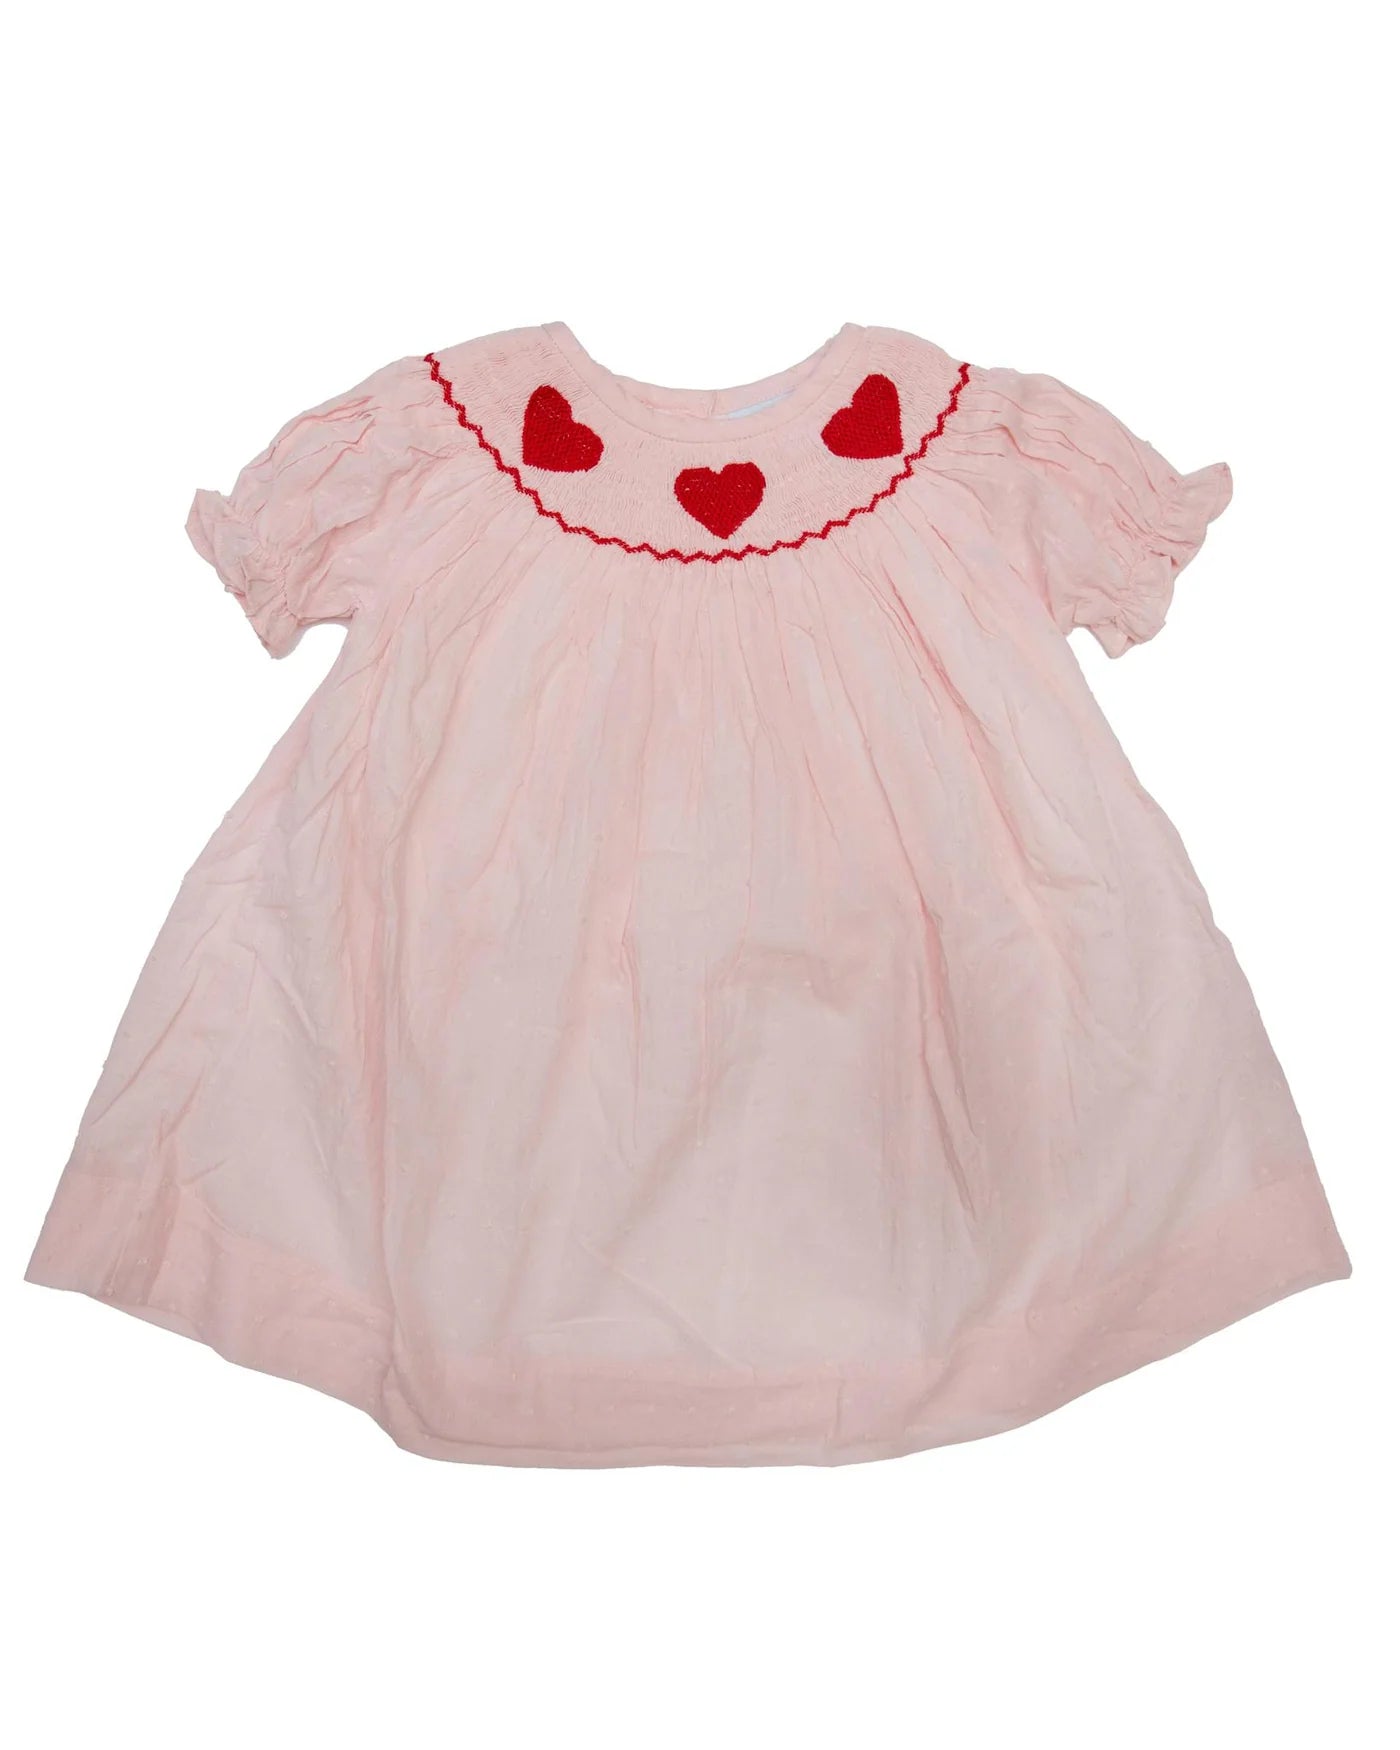 Sweetheart Emmie Dress  - Doodlebug's Children's Boutique